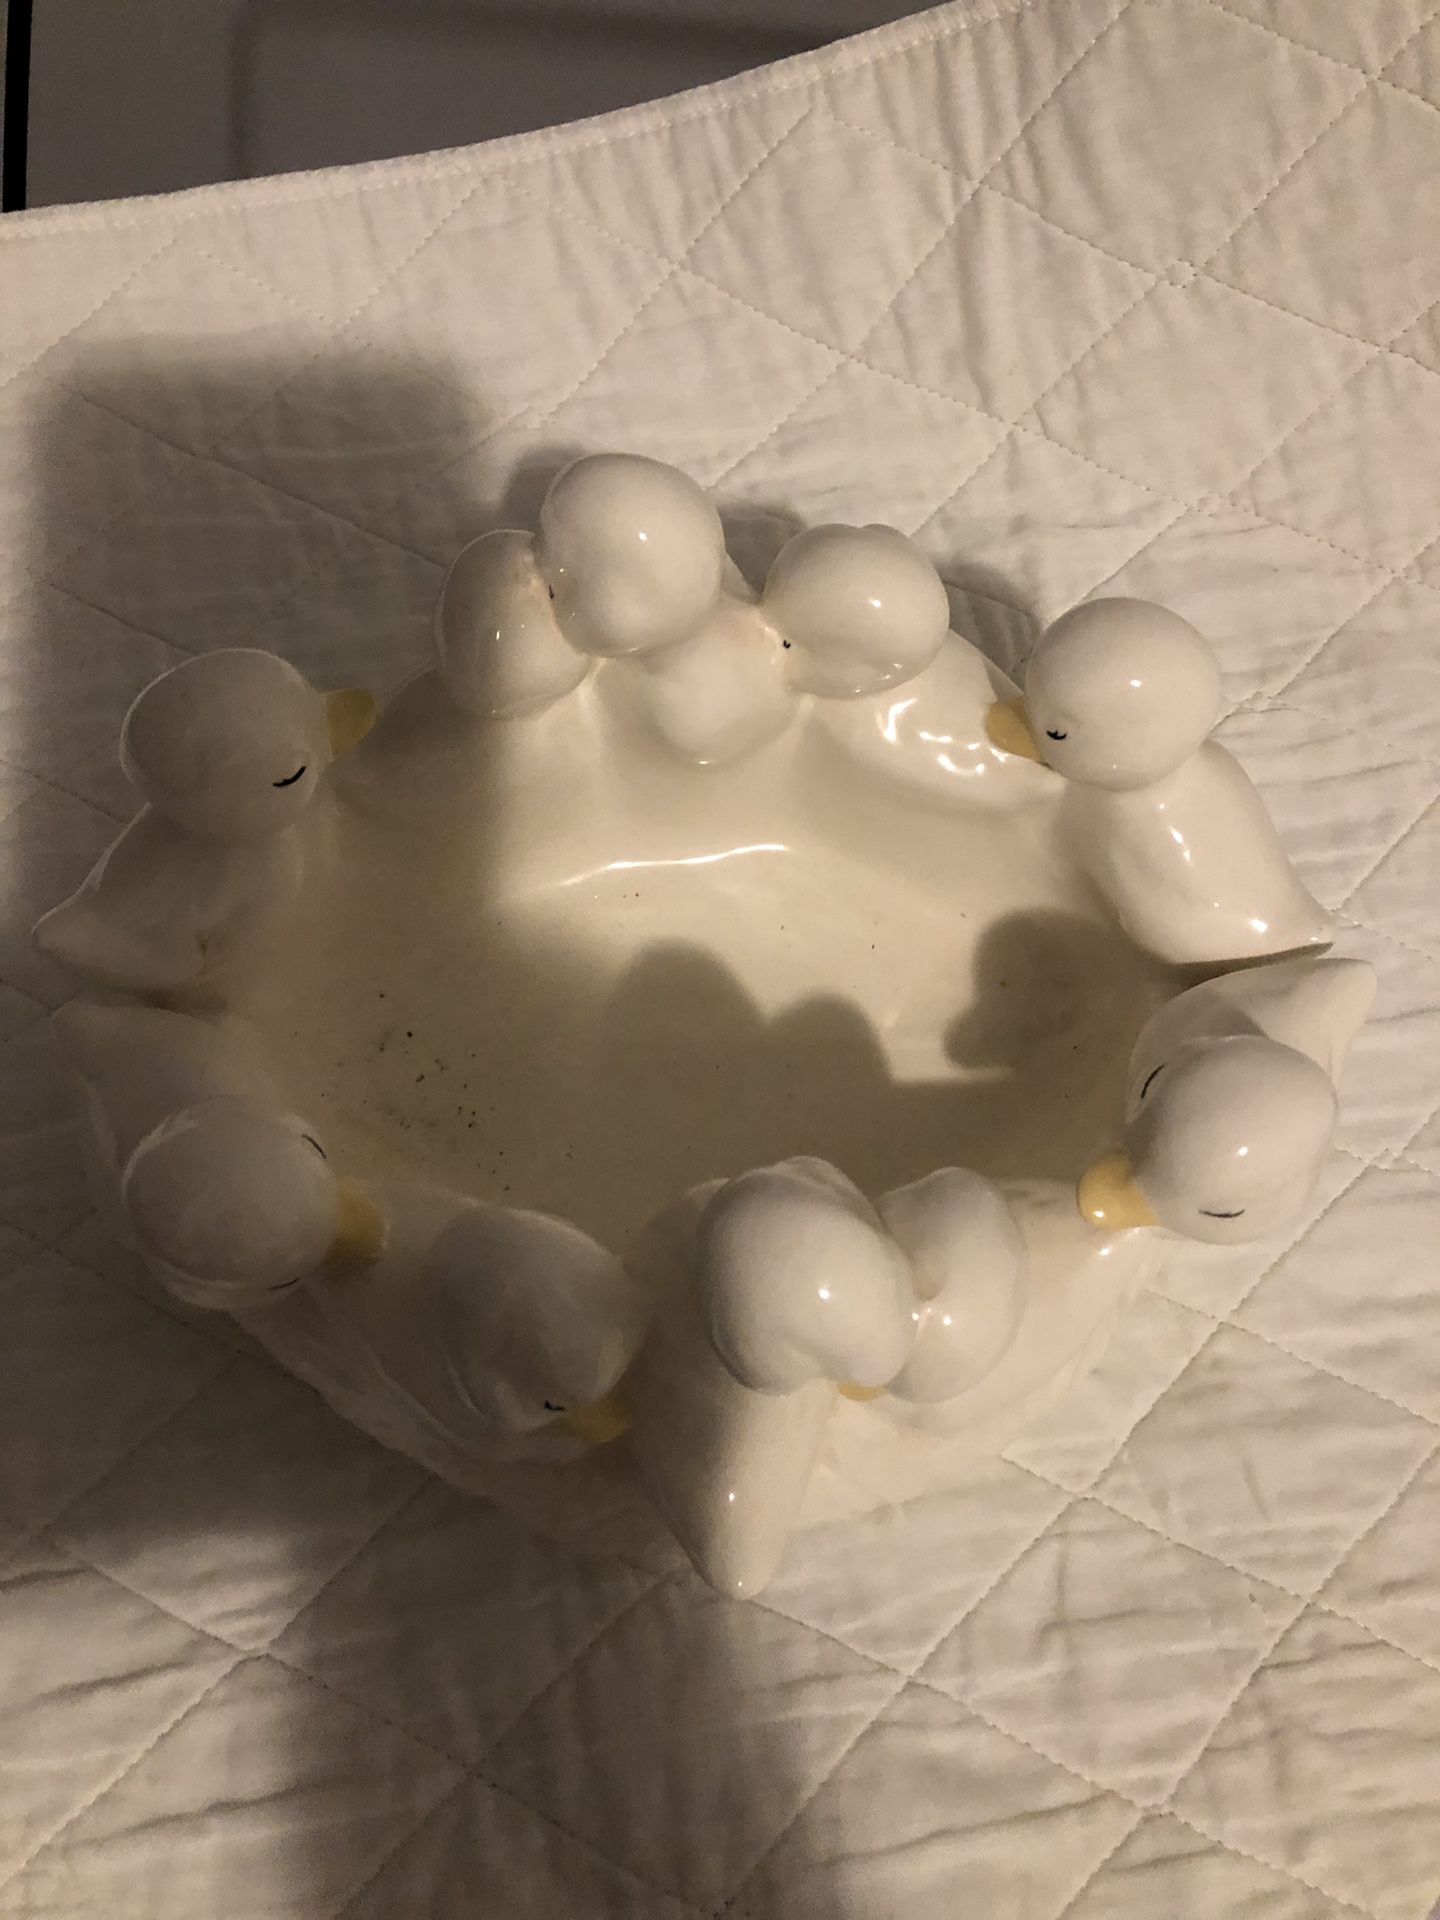 Irish Glass cross, duckling bowl, decorative egg.